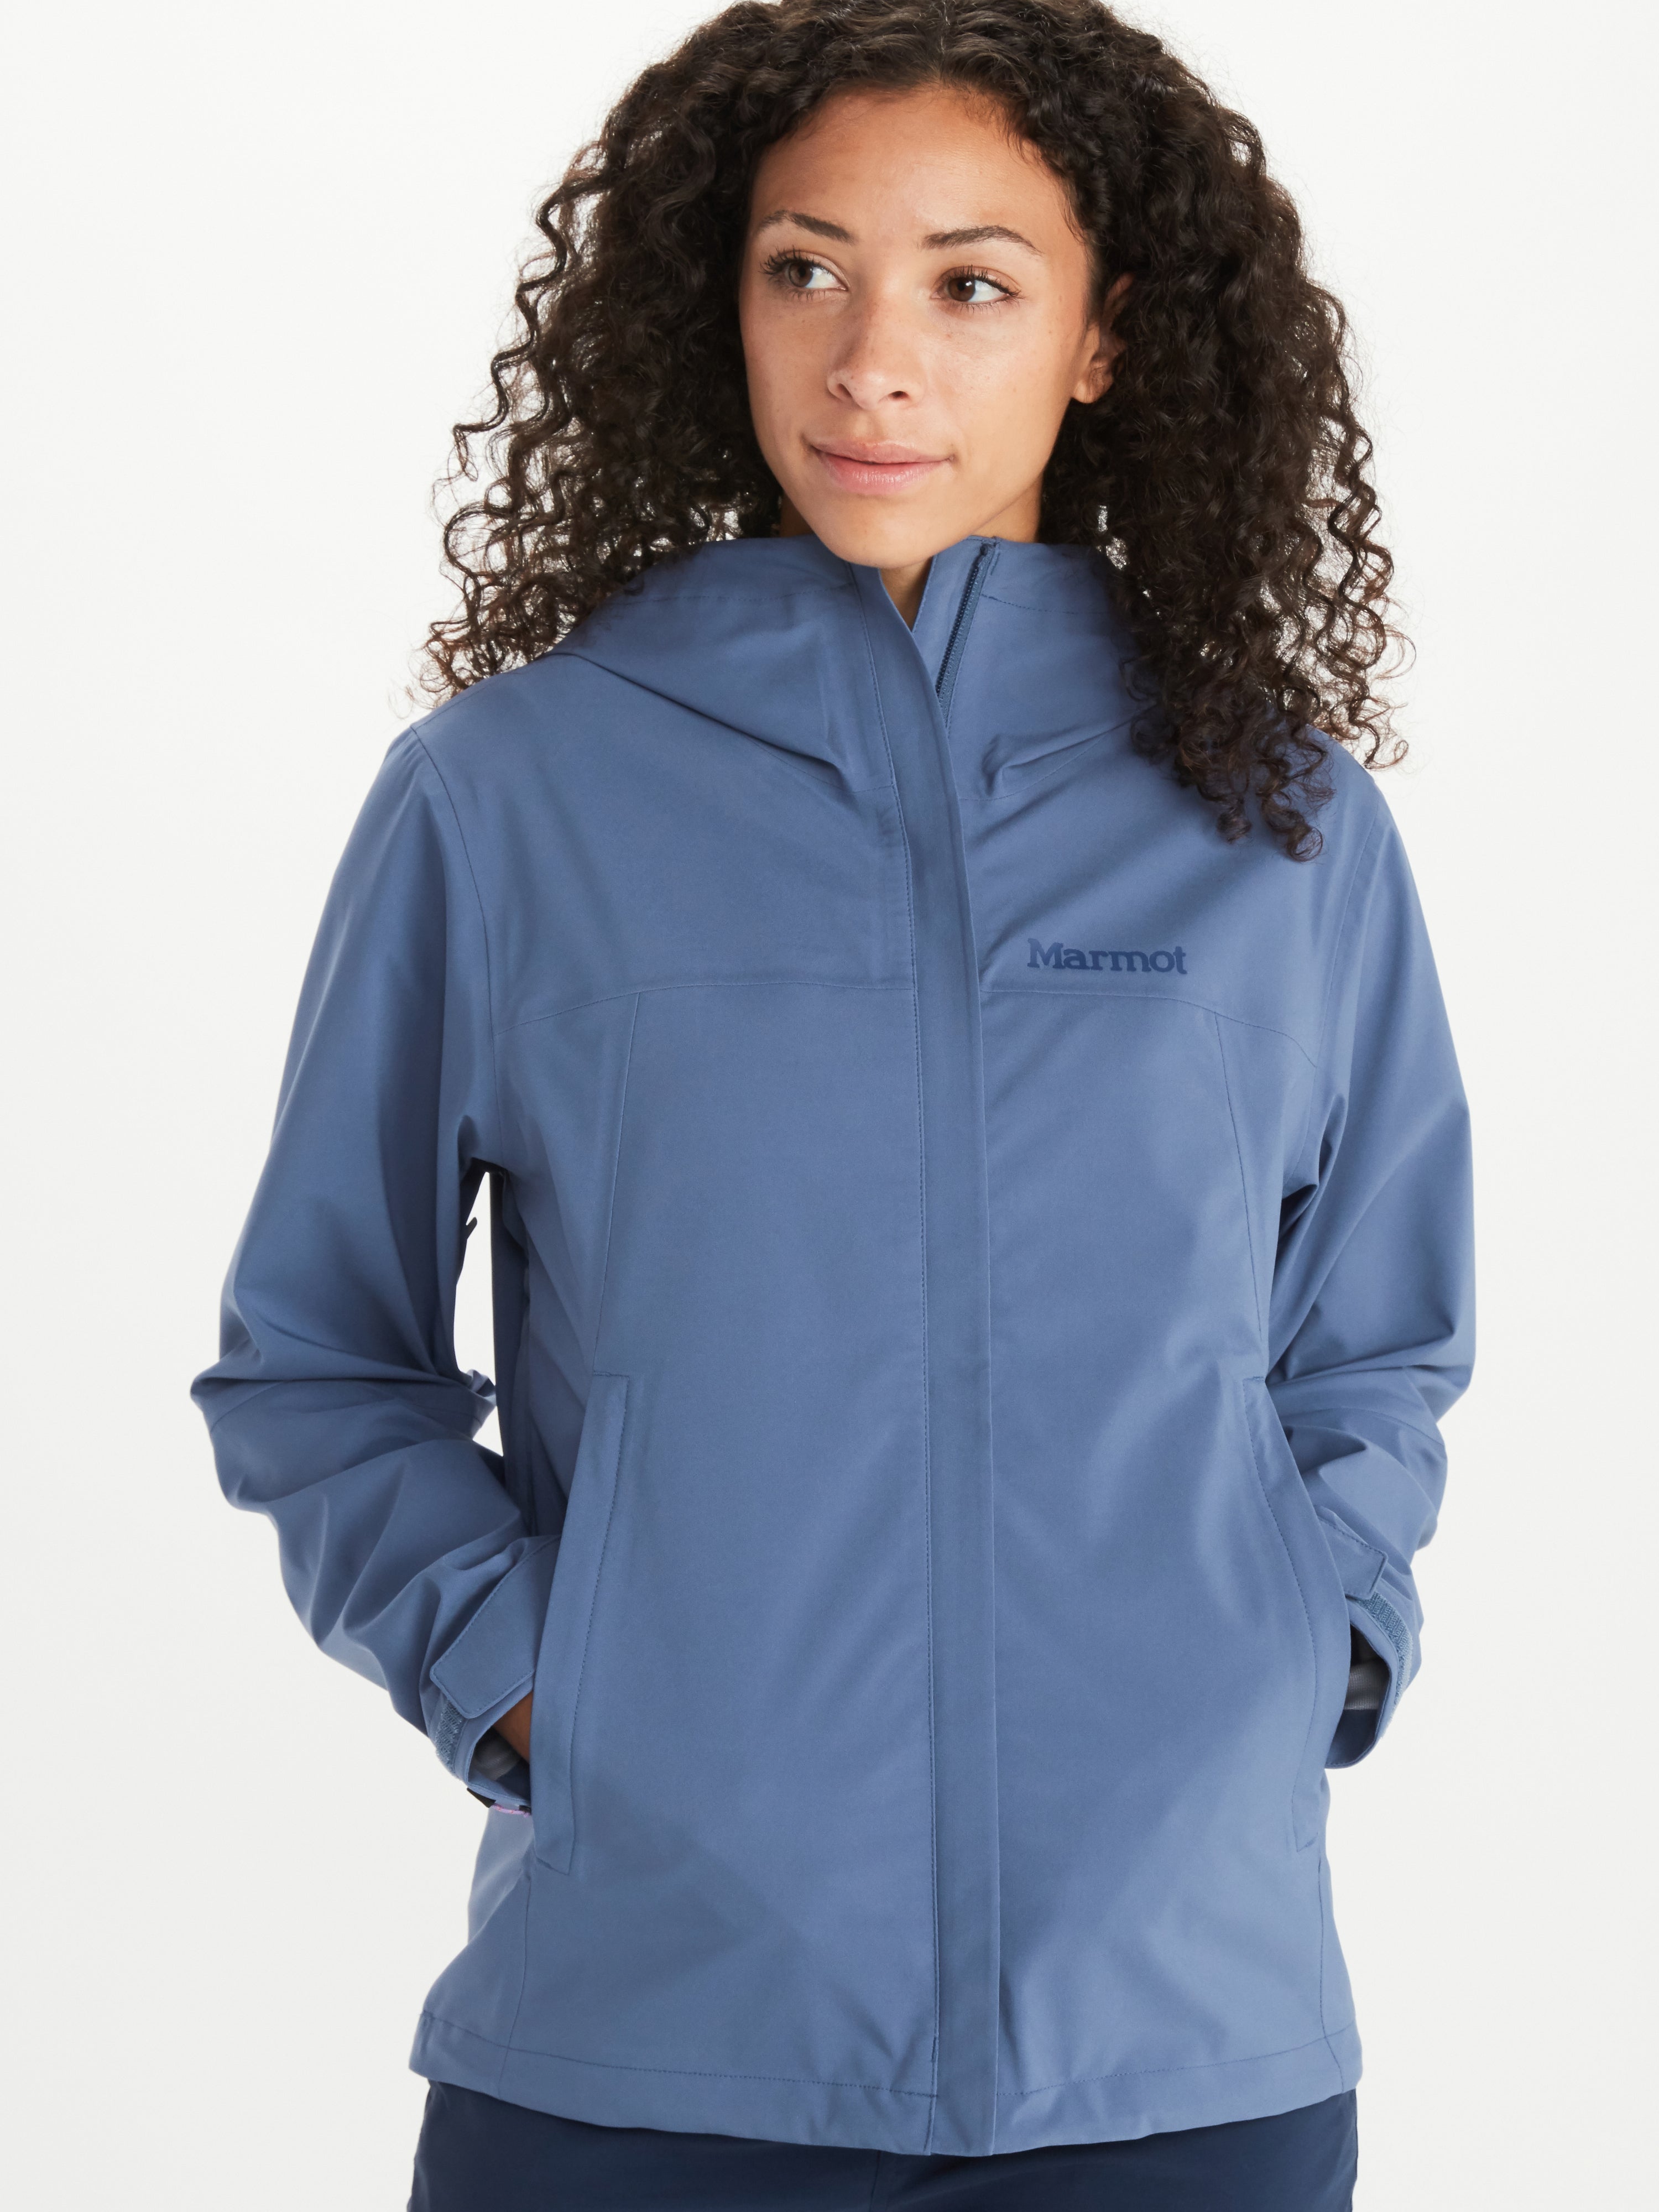 Marmot Women's PreCip® Eco Pro Jacket - Storm